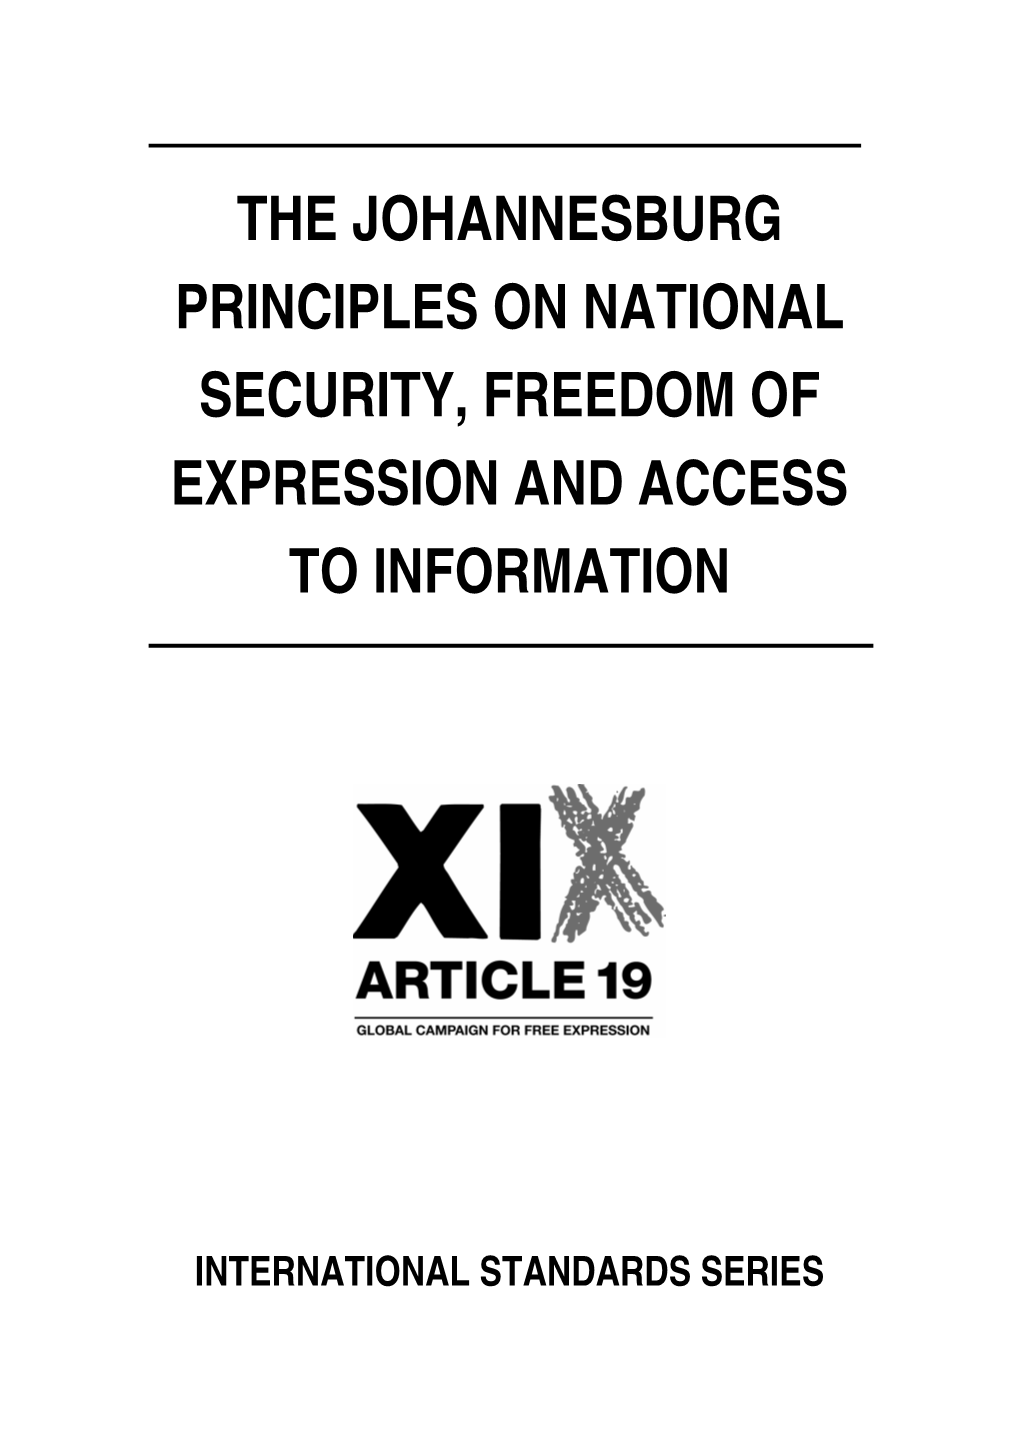 Johannesburg Principles on National Security